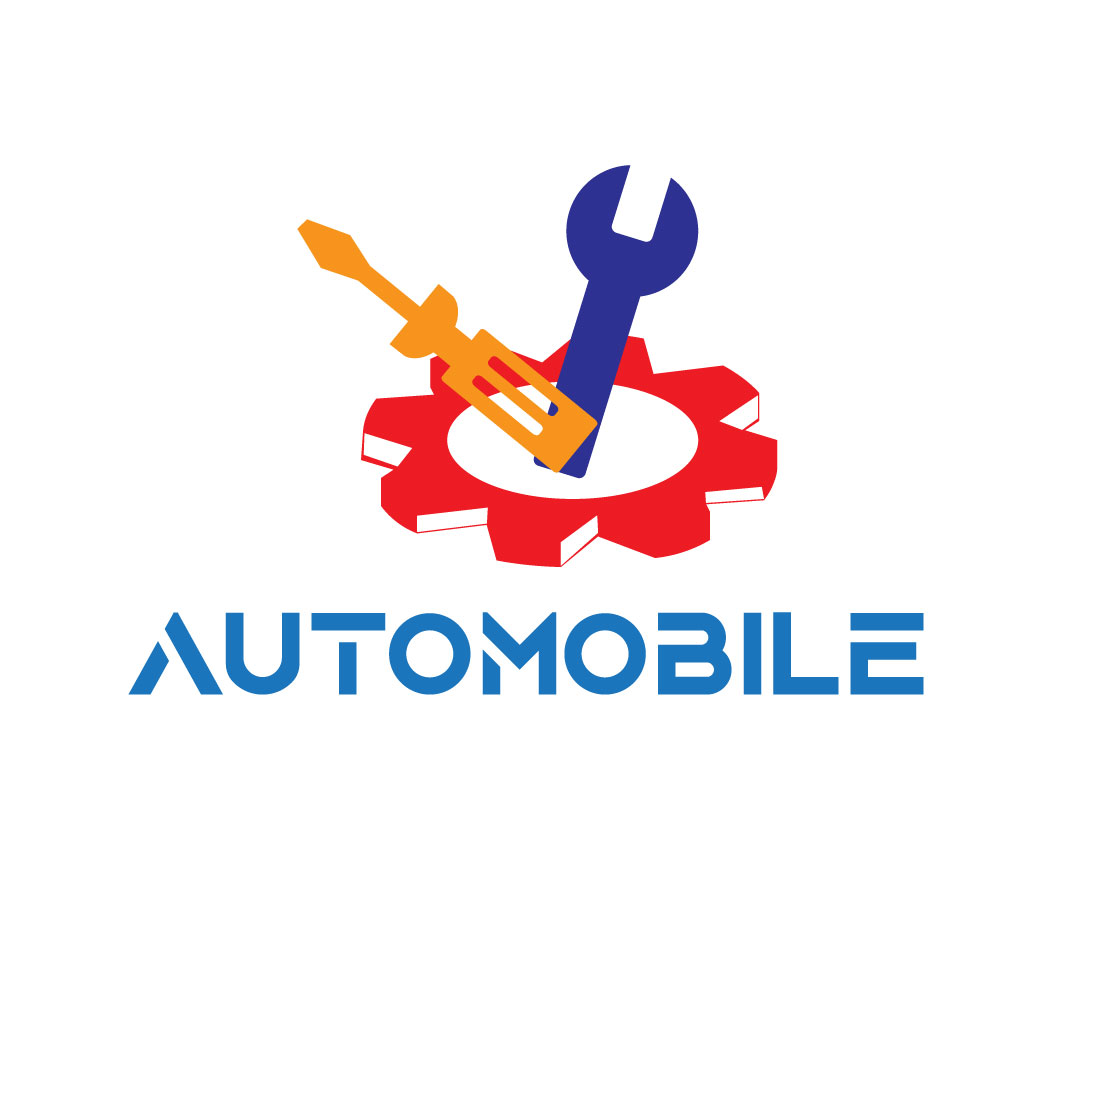 Automobile Logo preview image.